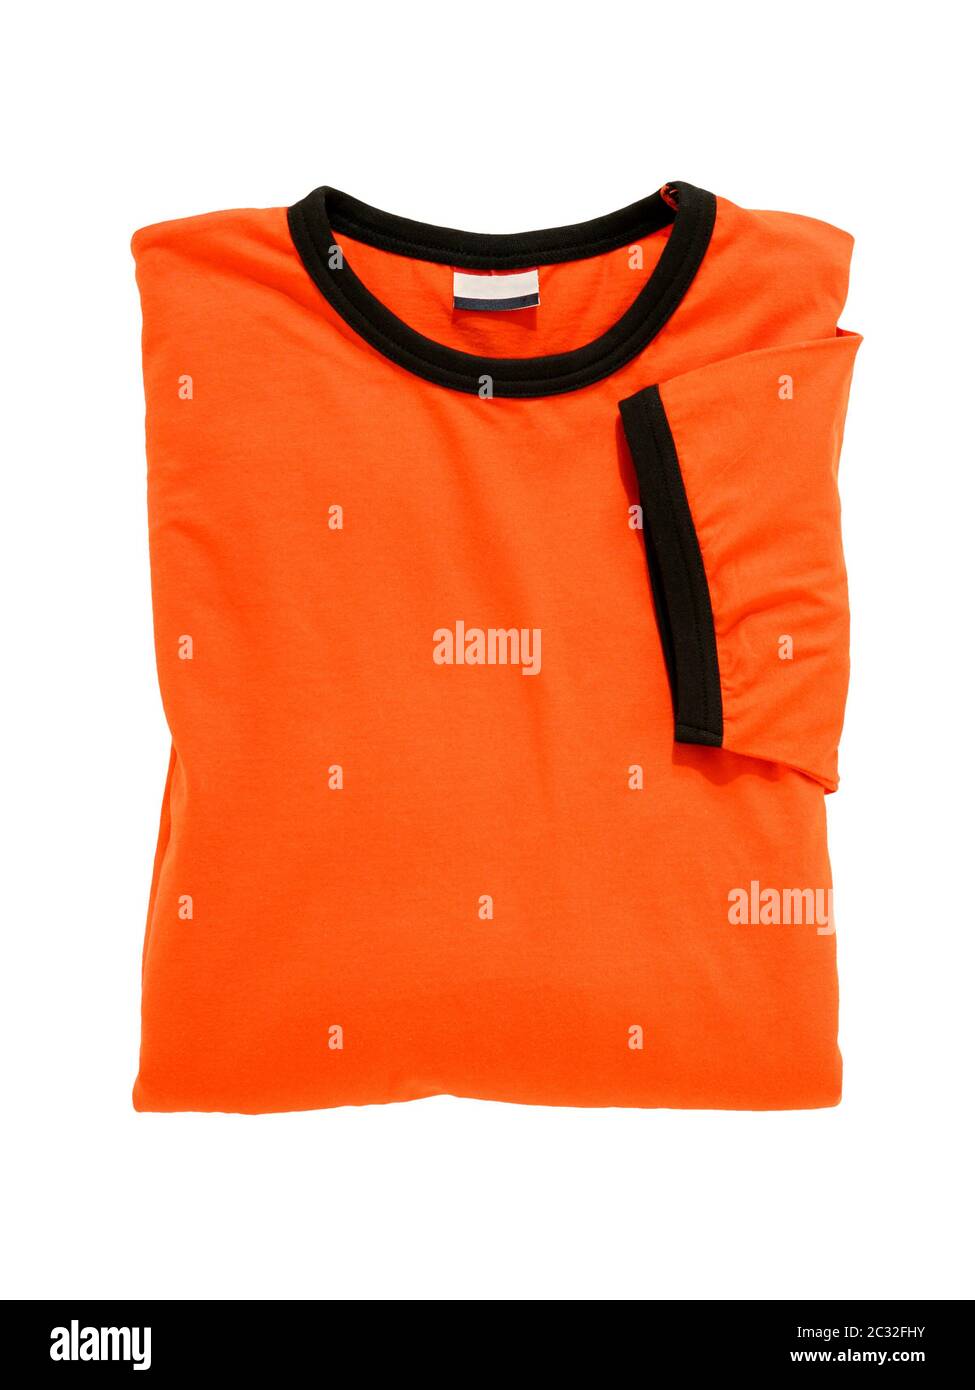 Niño con camiseta naranja Imágenes recortadas de stock - Alamy